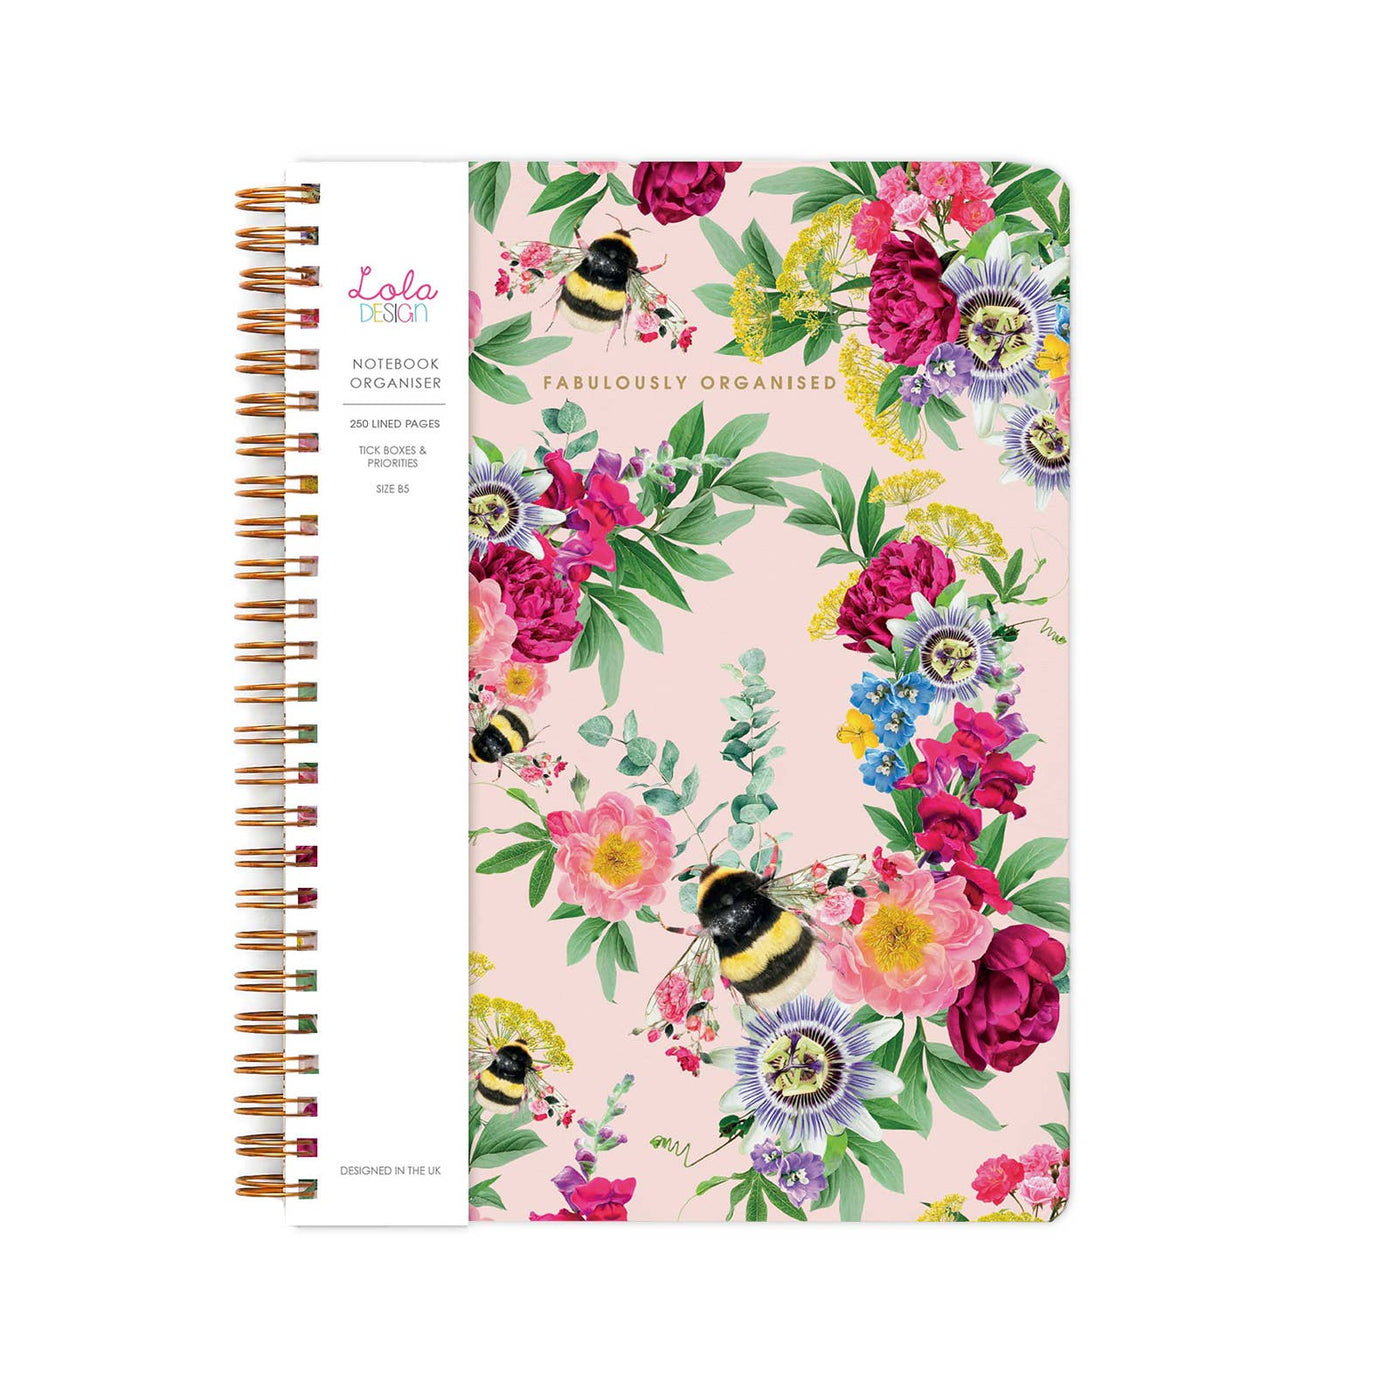 Wiro Bound pink patterBee Luxury Organiser Notebook